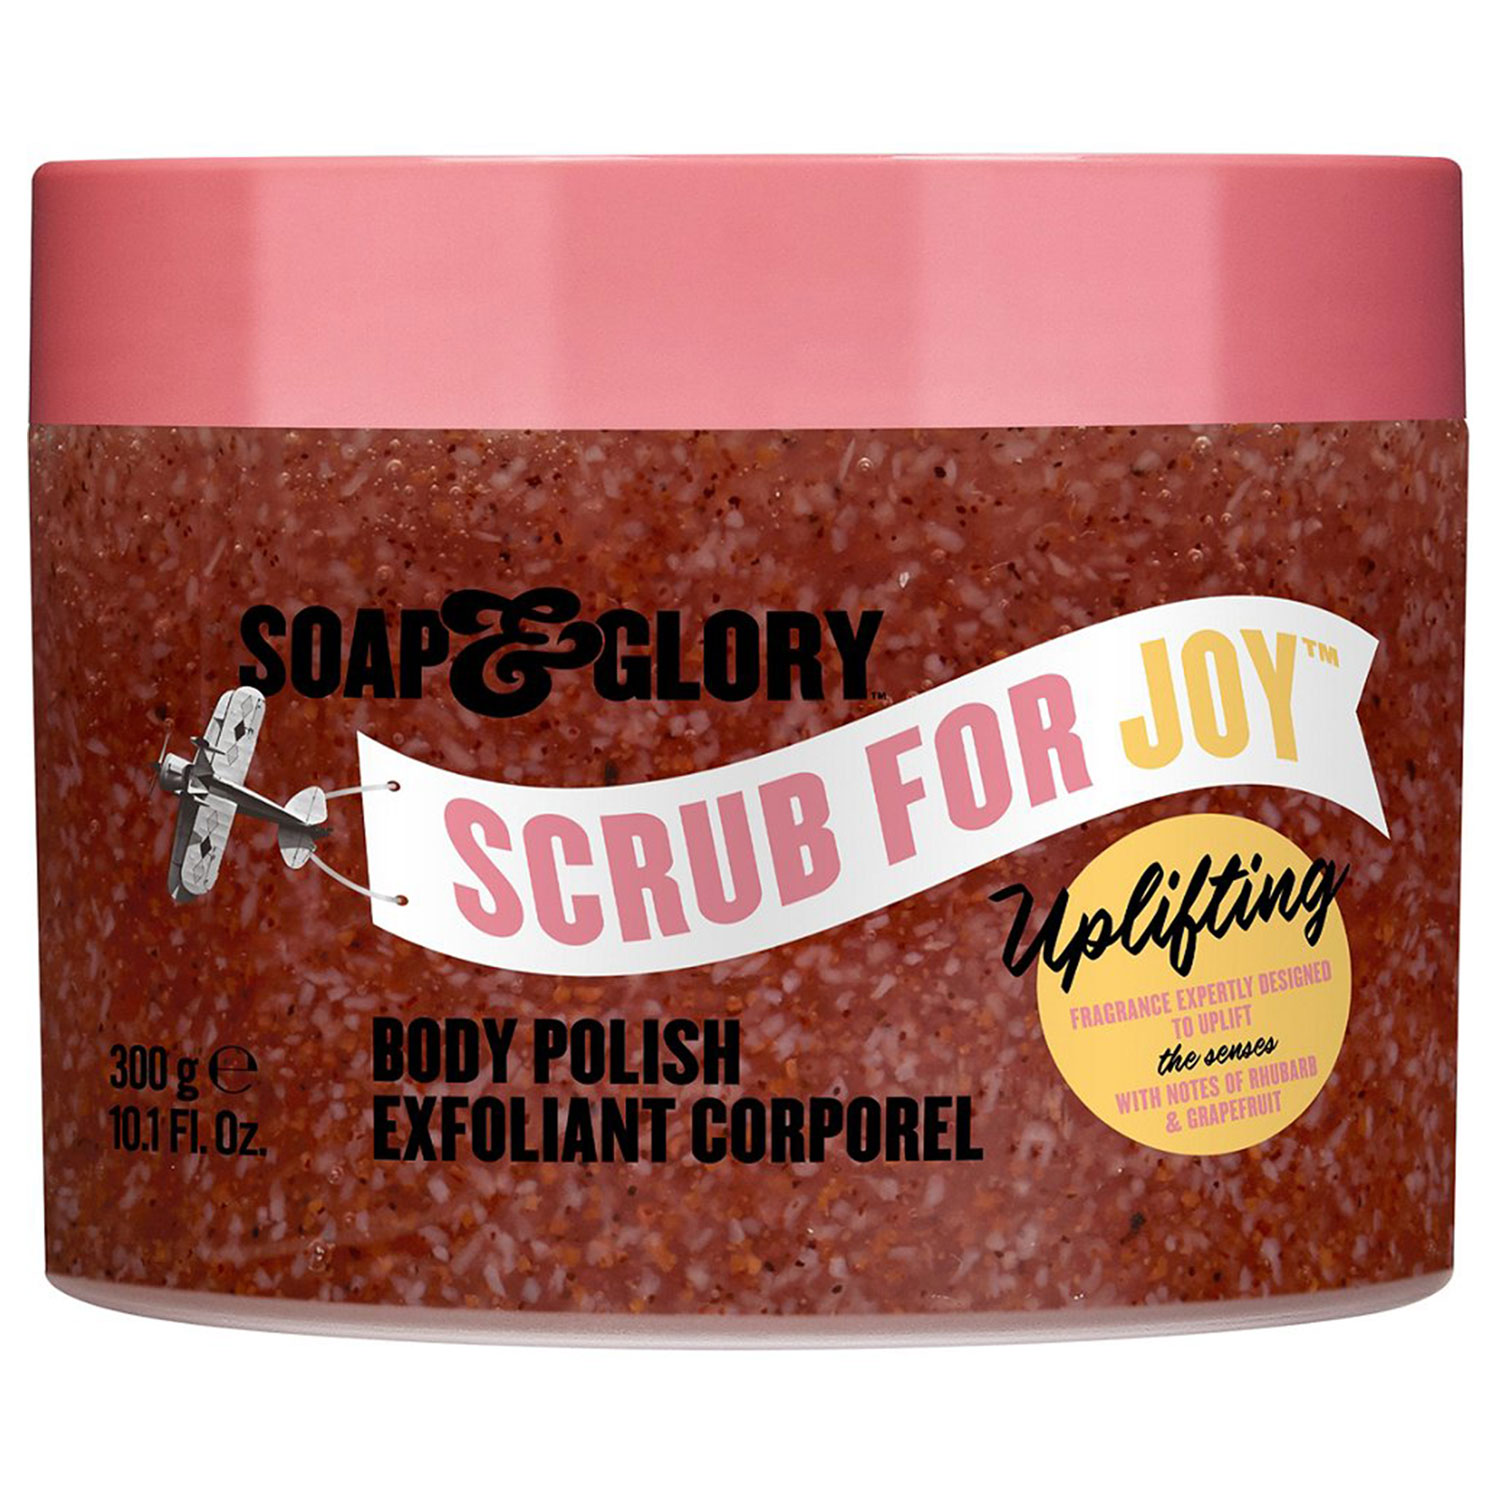 scrub for joy body polish